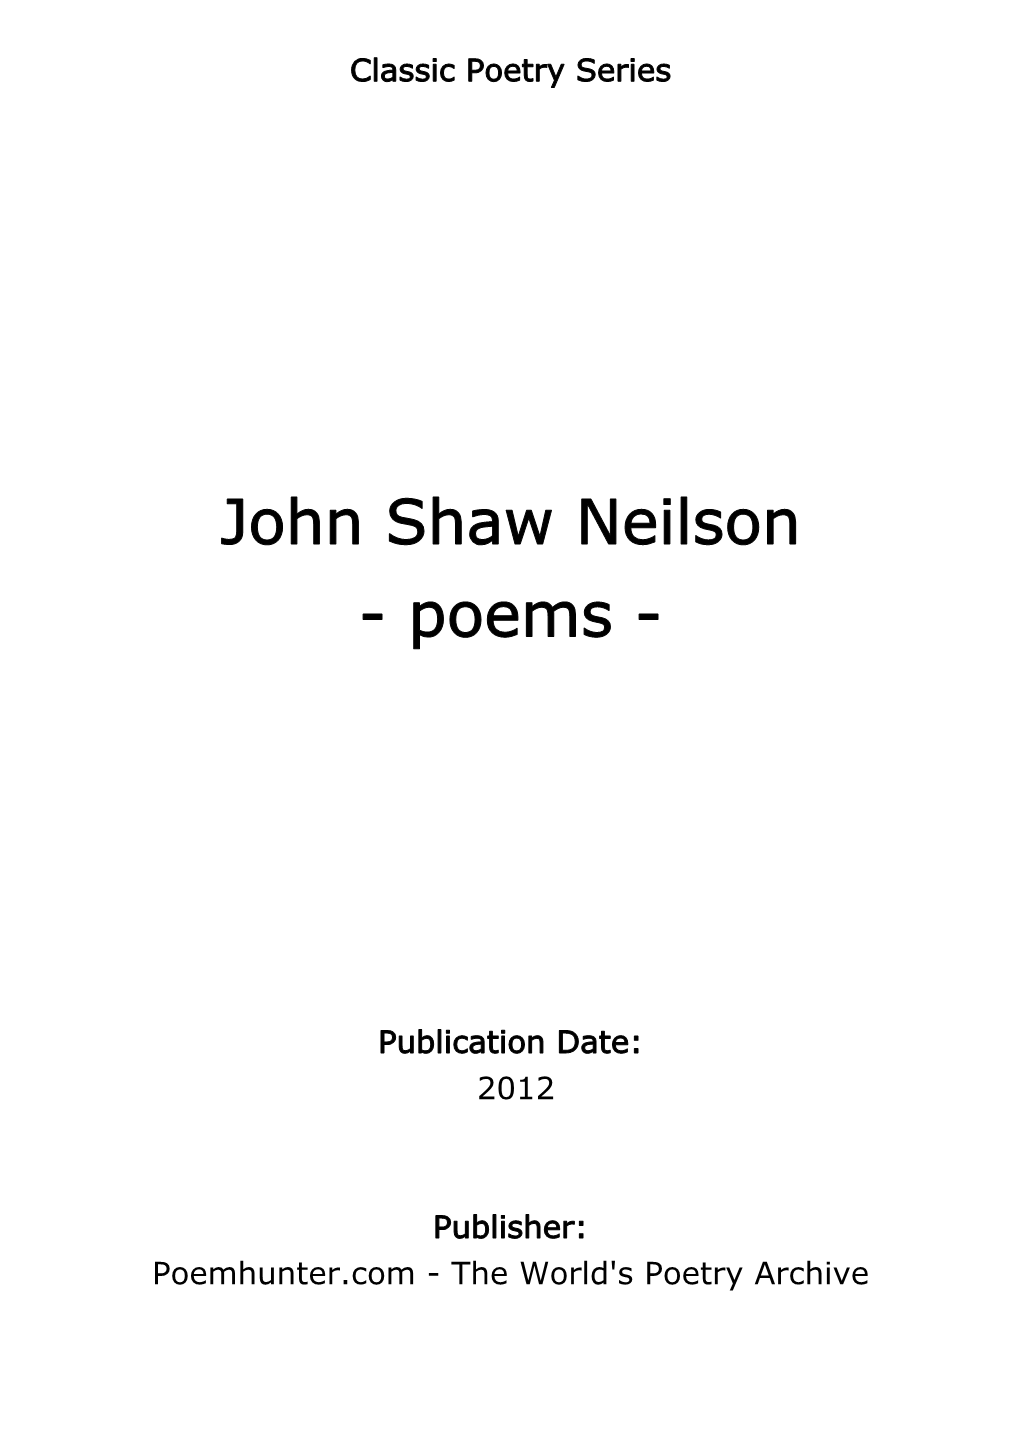 John Shaw Neilson - Poems